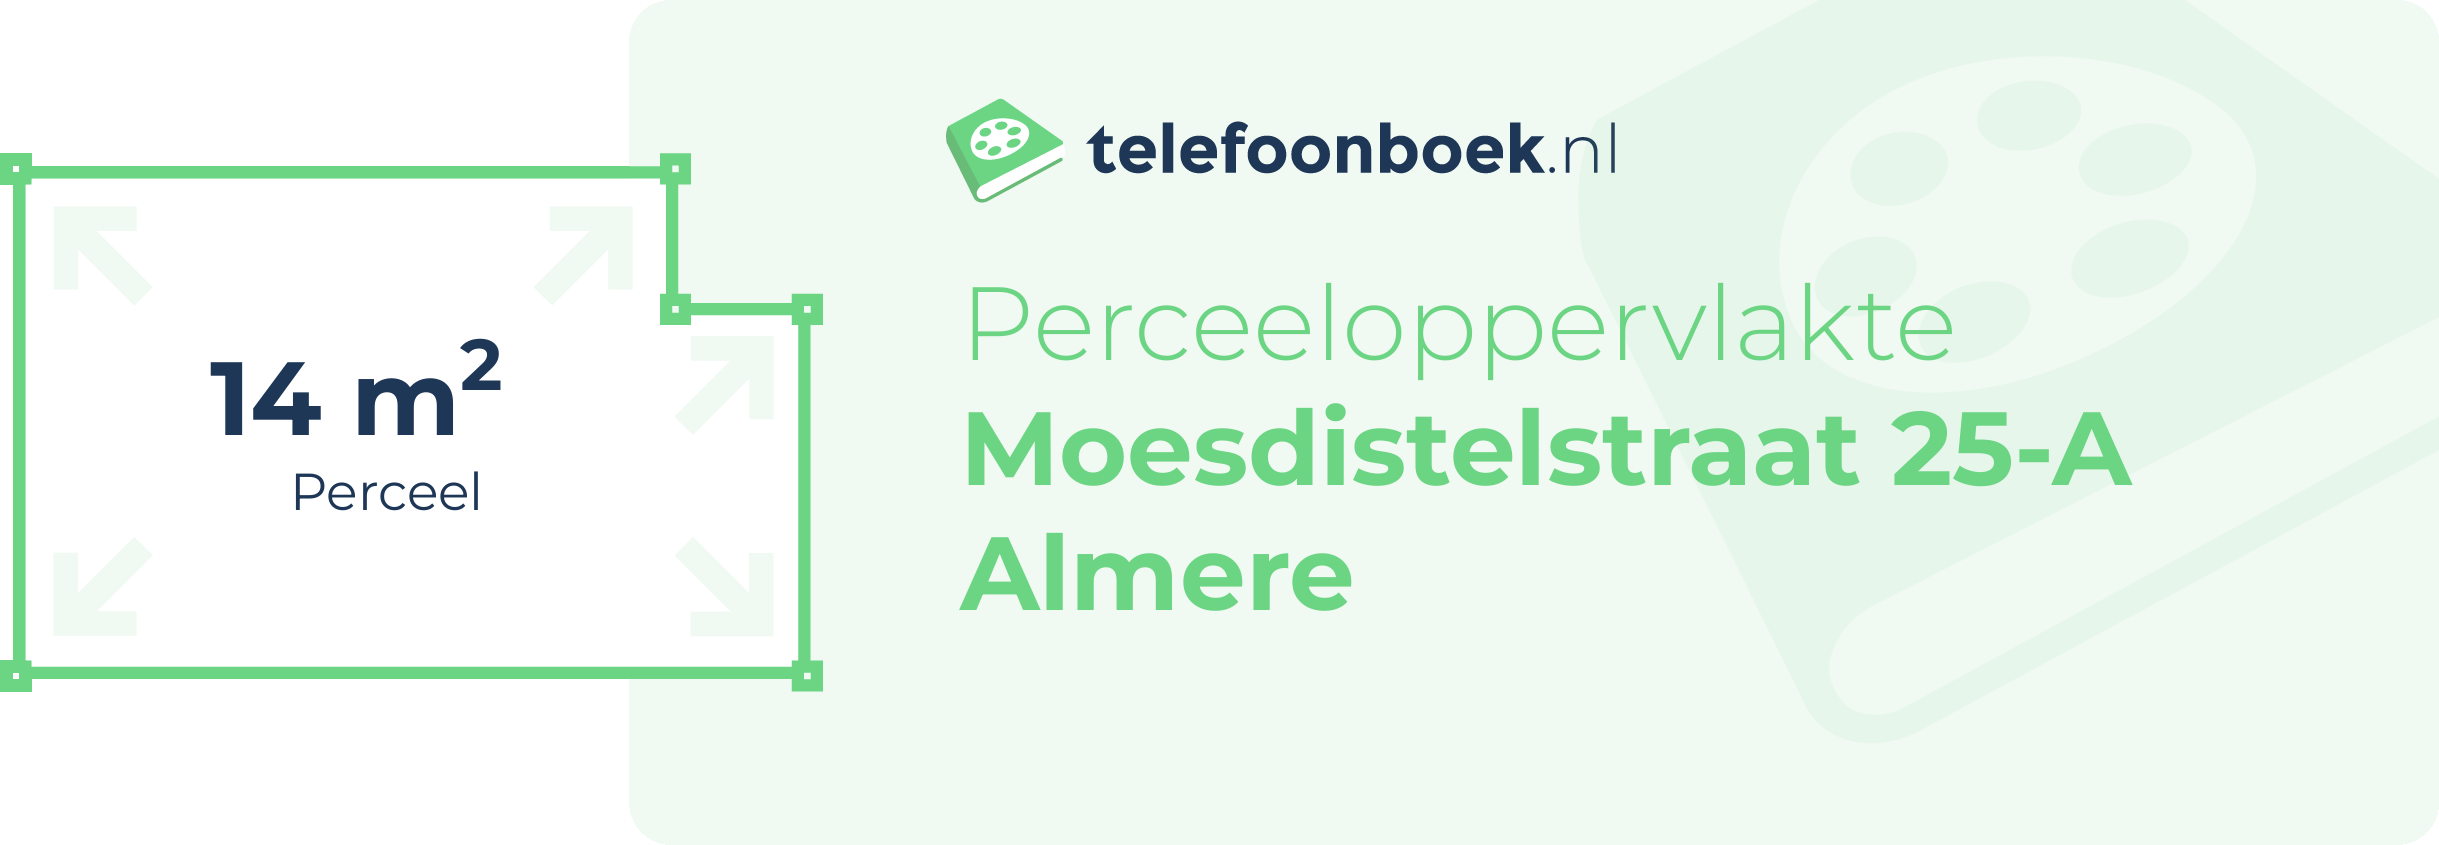 Perceeloppervlakte Moesdistelstraat 25-A Almere